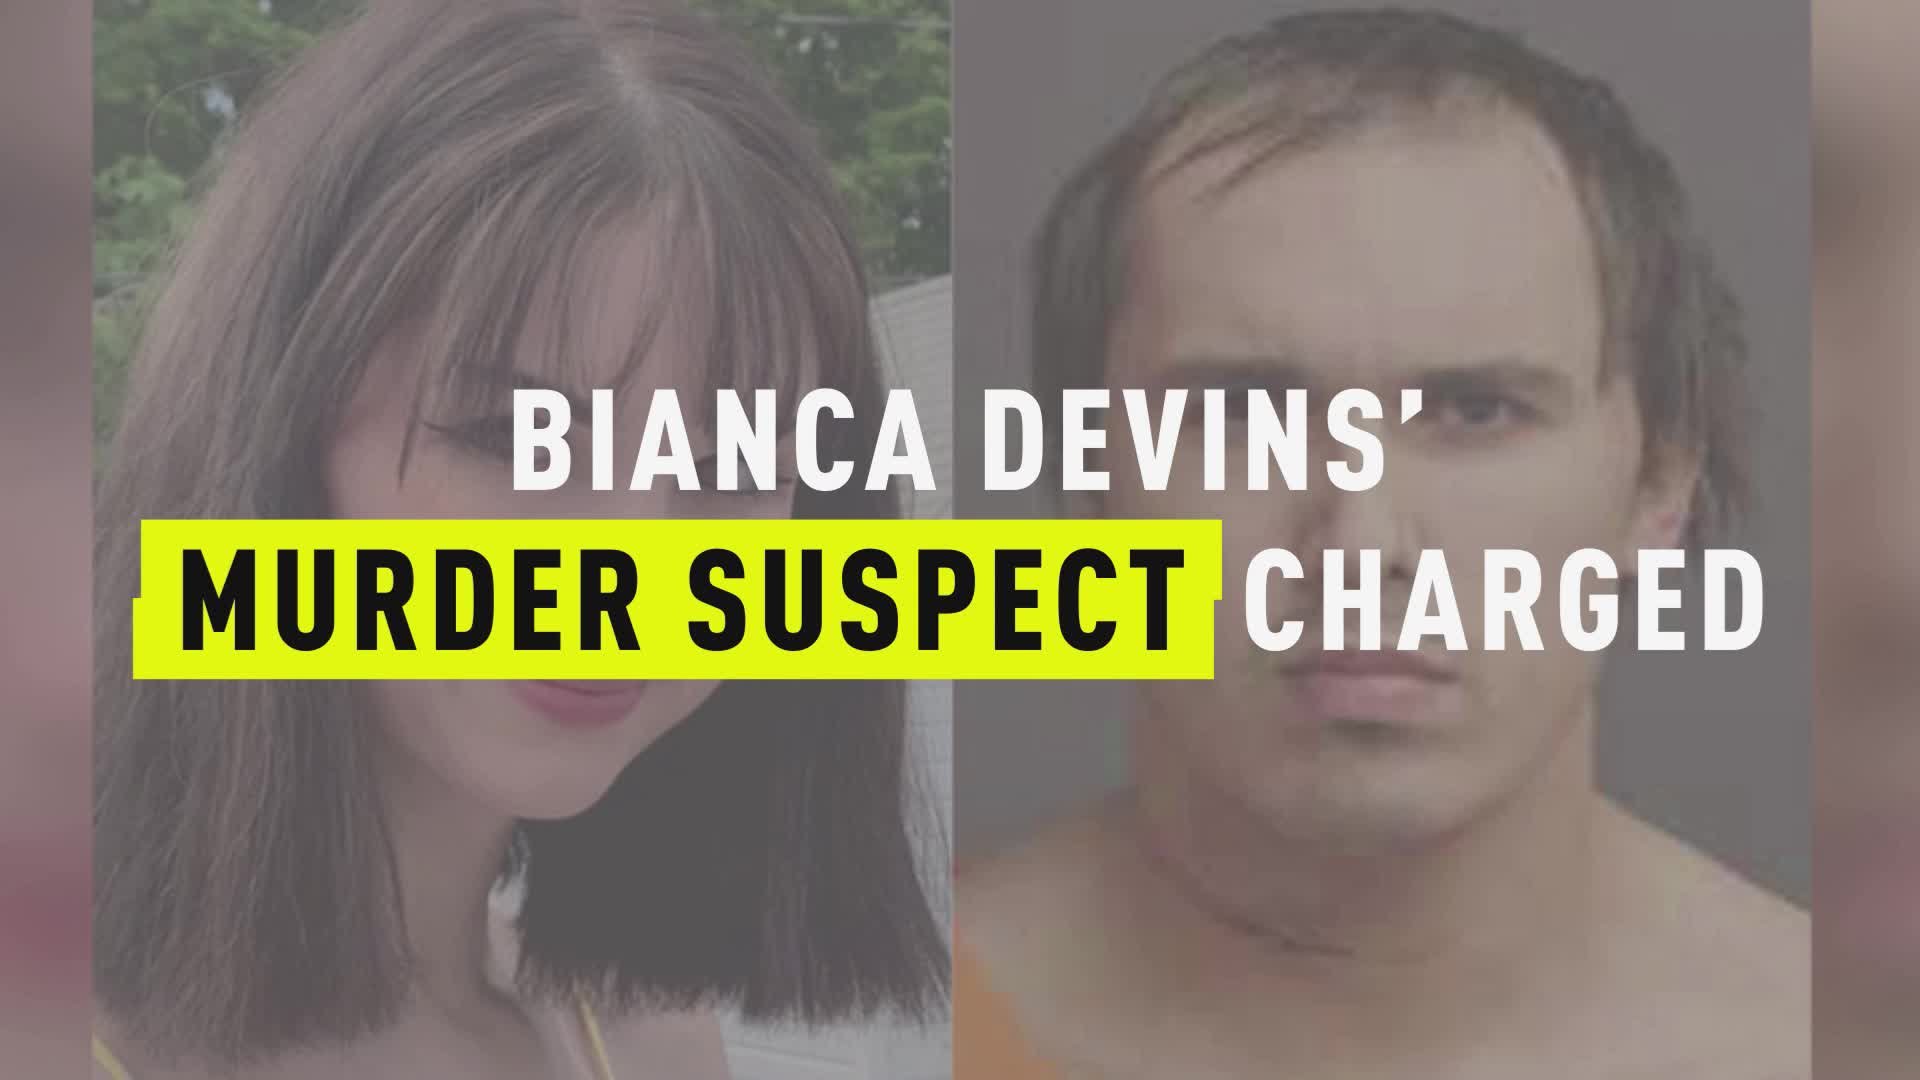 Brandon Clark, Bianca Devins' Suspected Killer, Pleads Not Guilty | Crime News